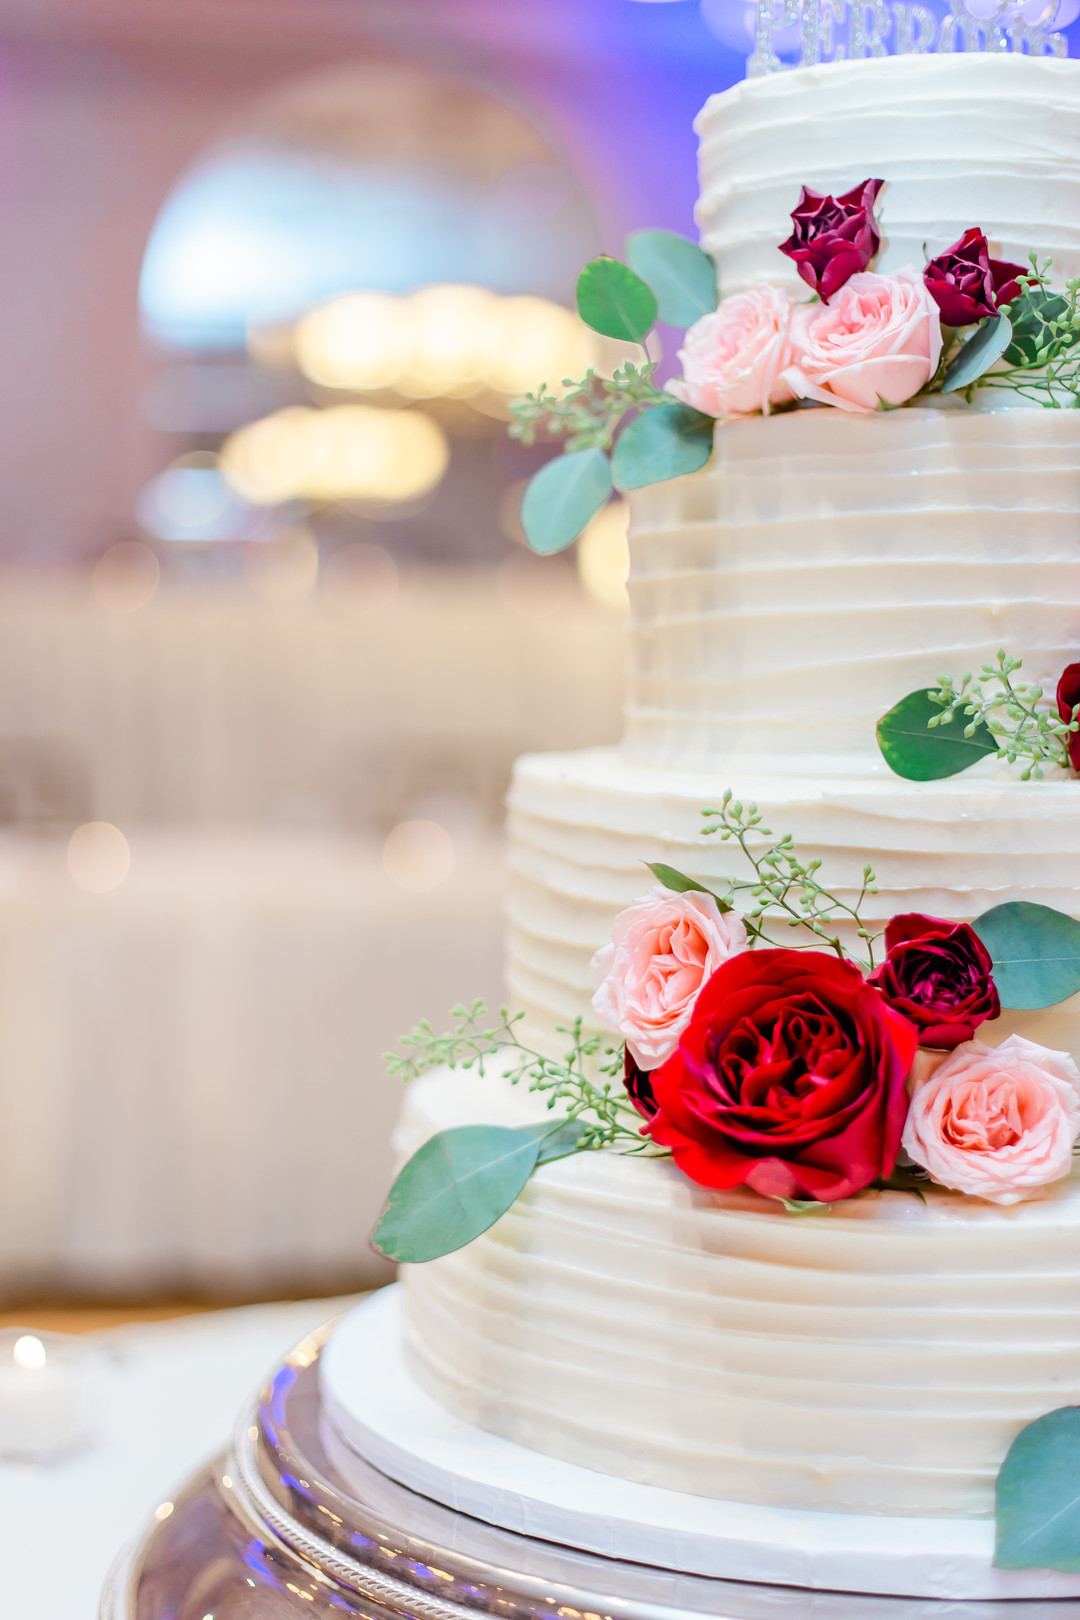 3-tiered elegant wedding cake